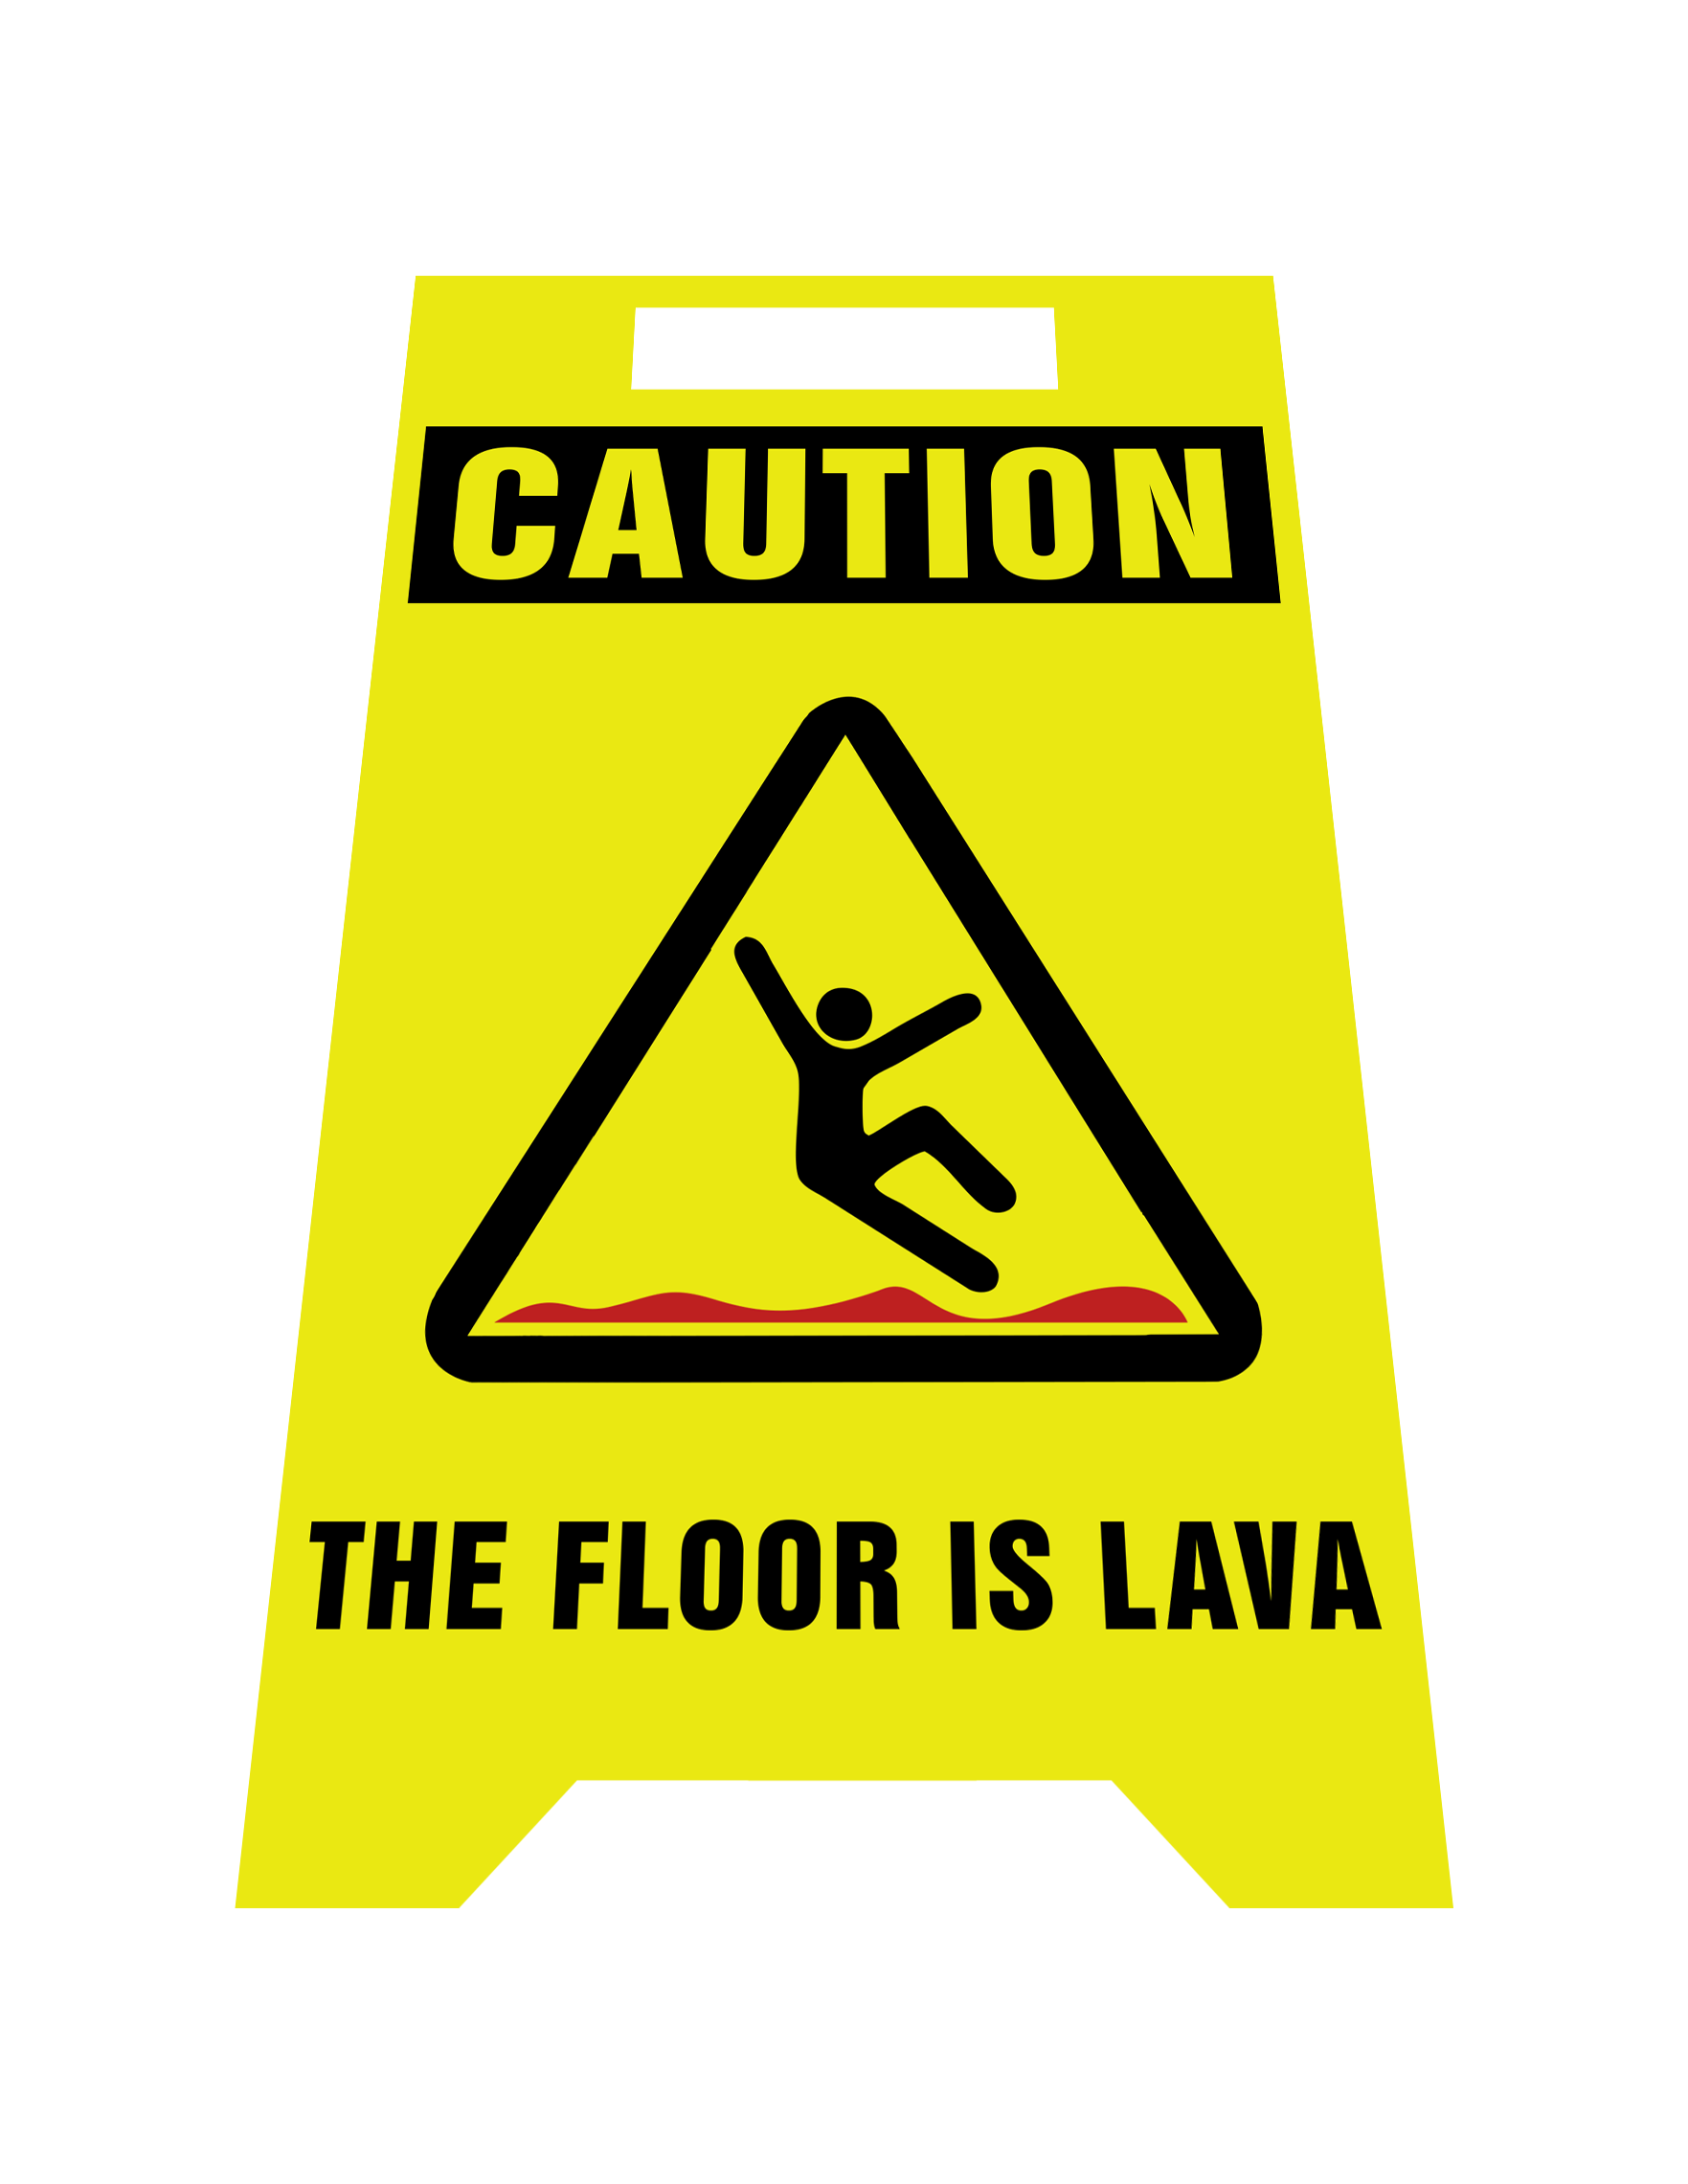 Caution The floor is lava by Morten Blum